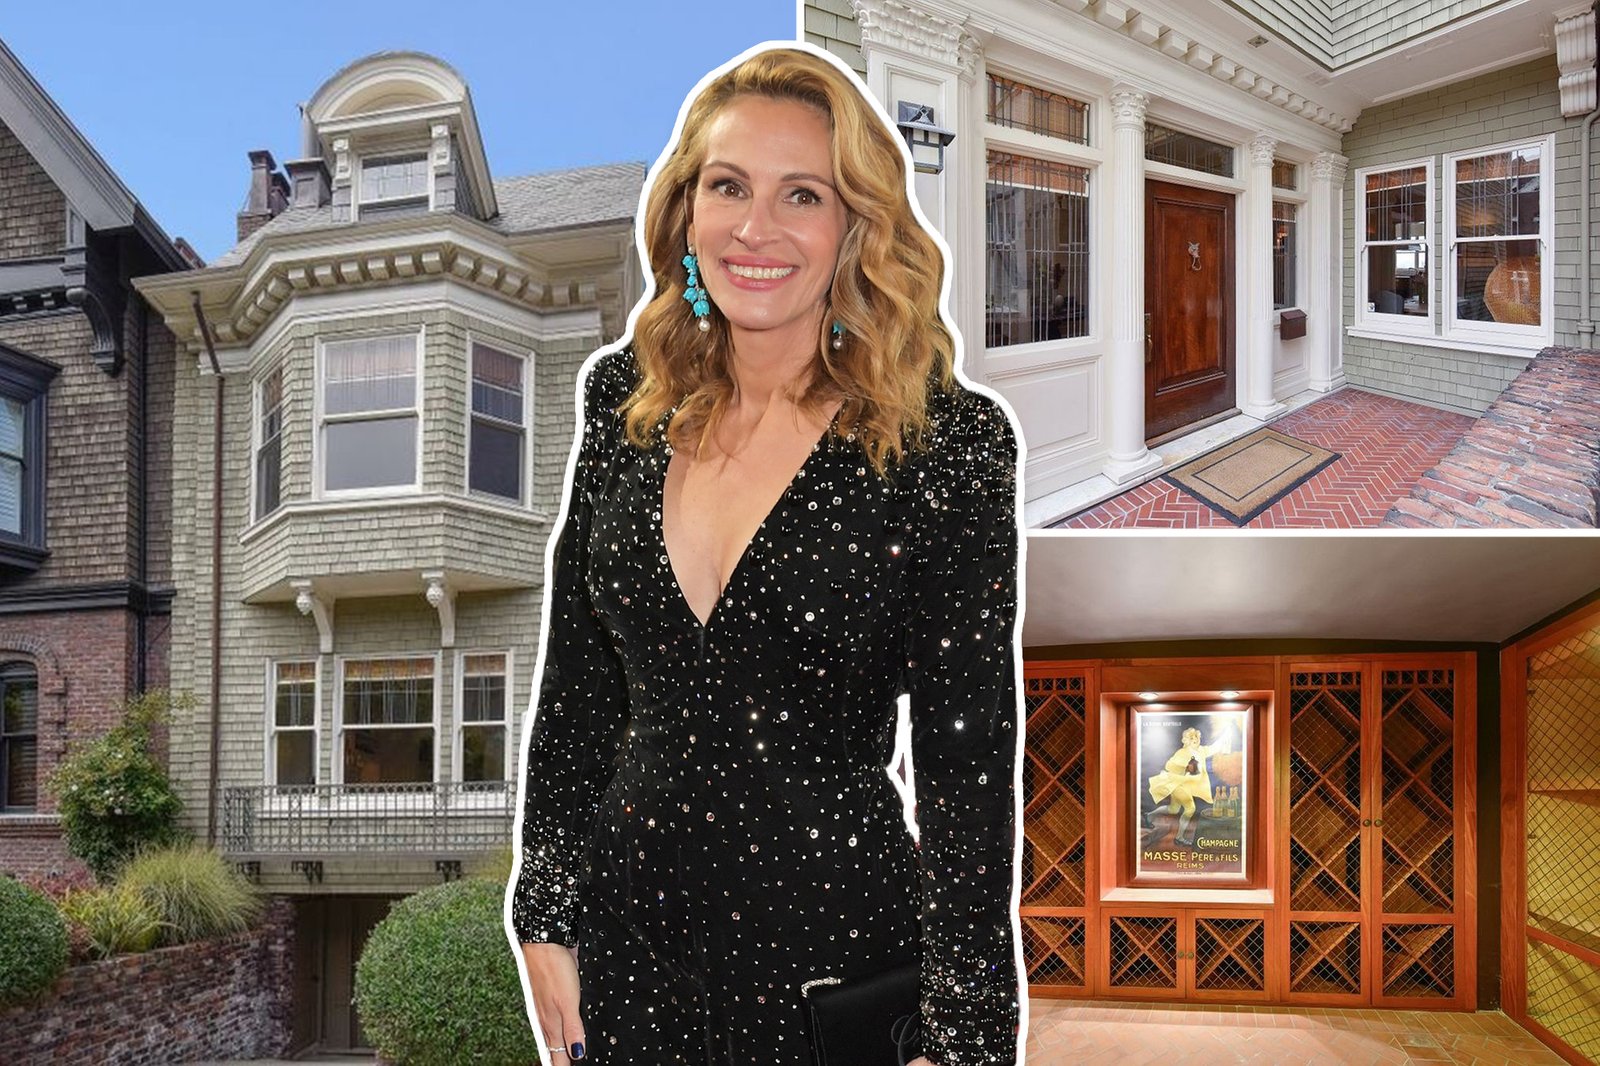 Internal Julia Roberts’ lovely $8.3M San Francisco dwelling